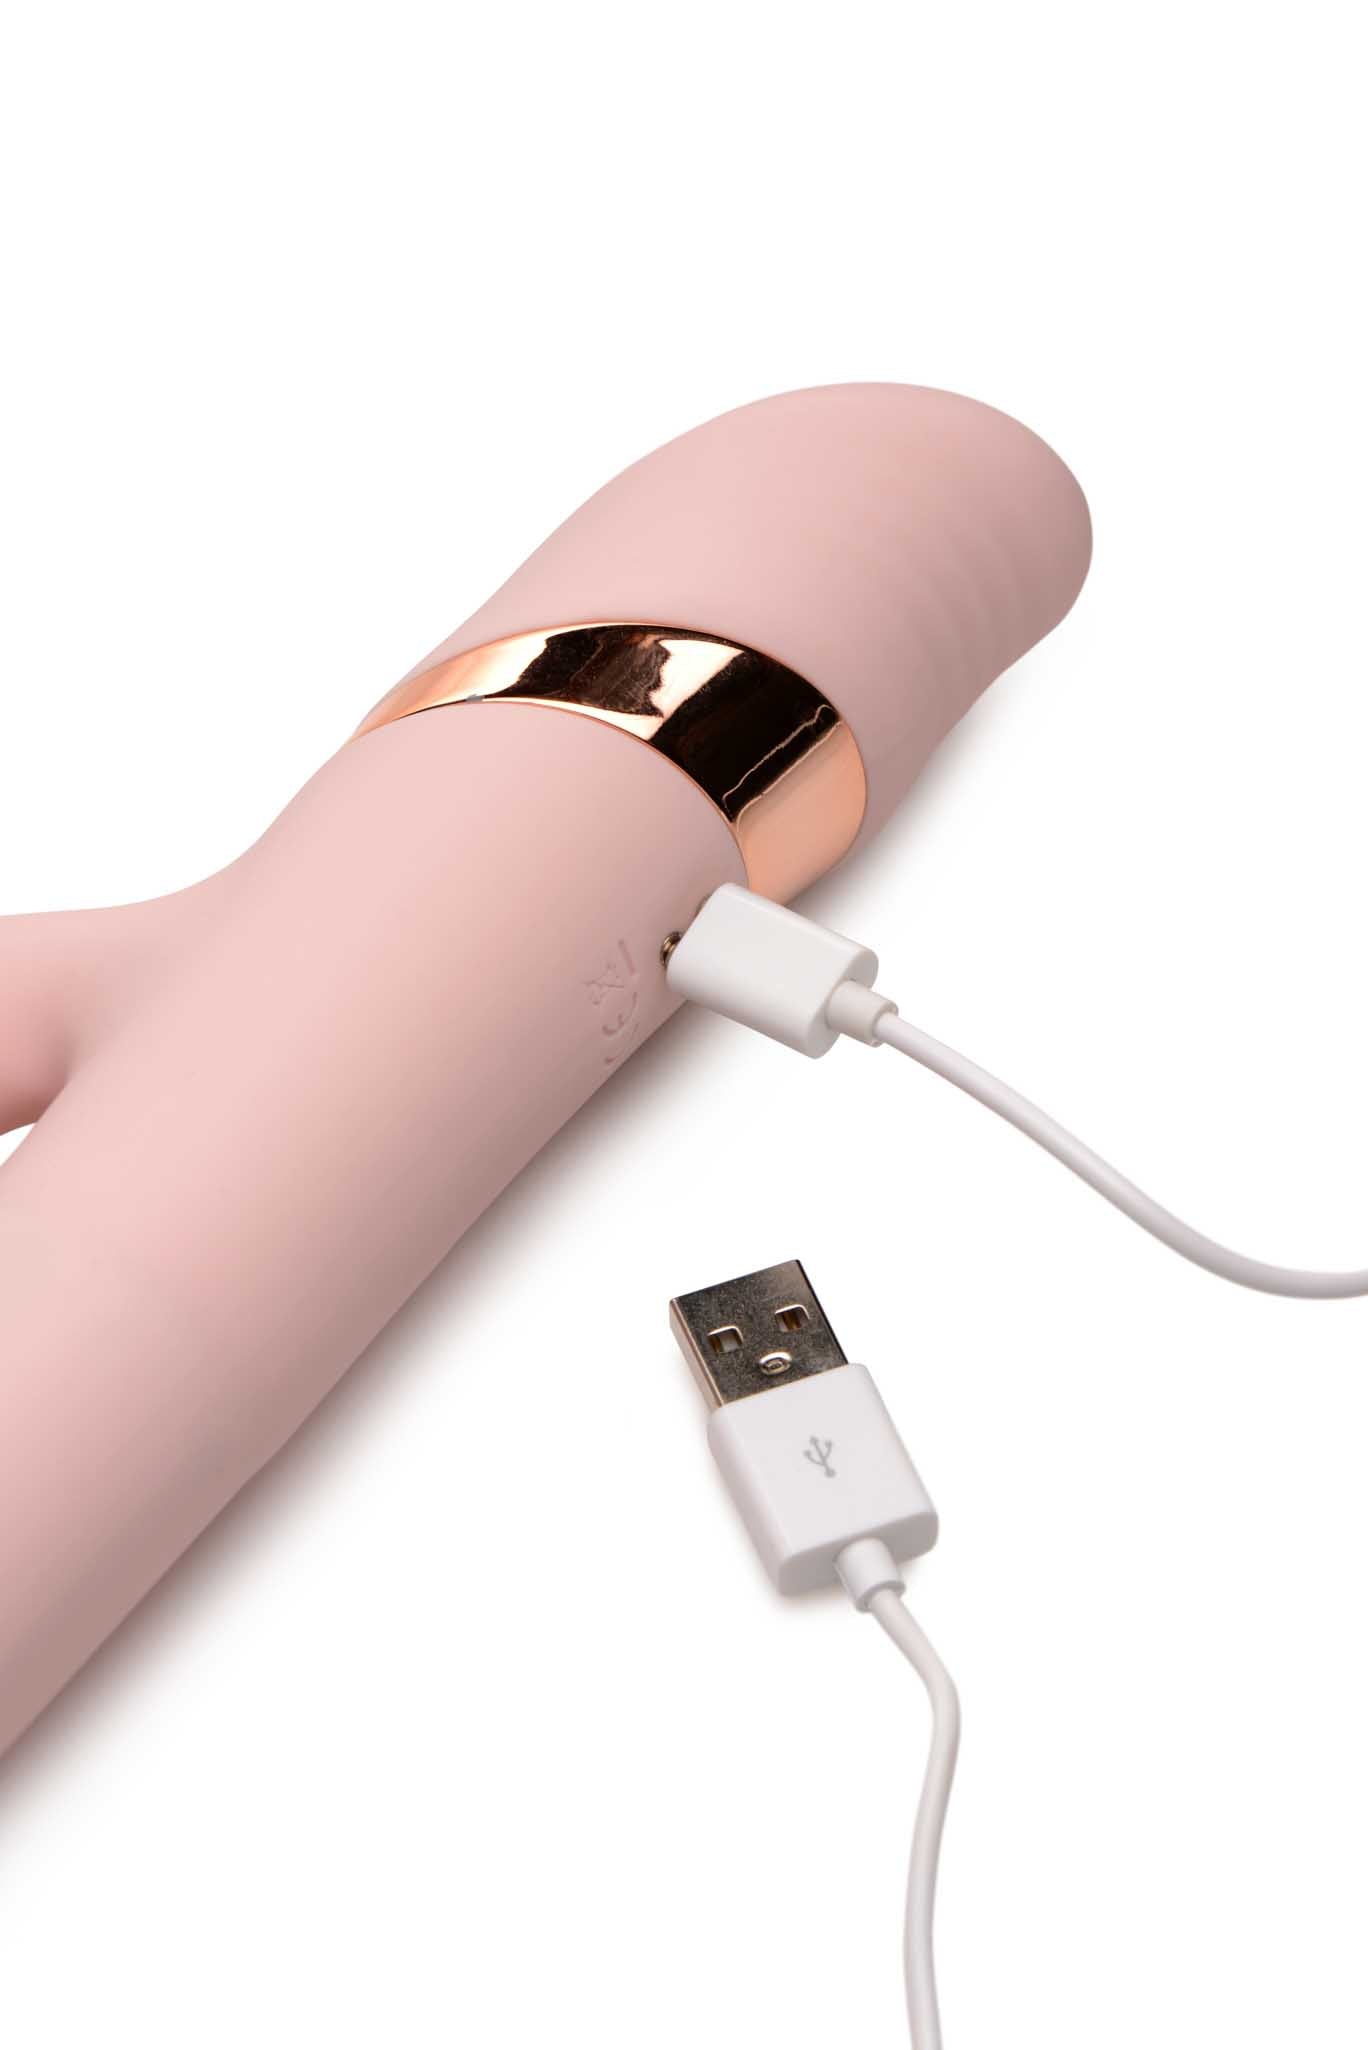 Inmi Sliding Ring Silicone Rabbit Vibrator - Pink